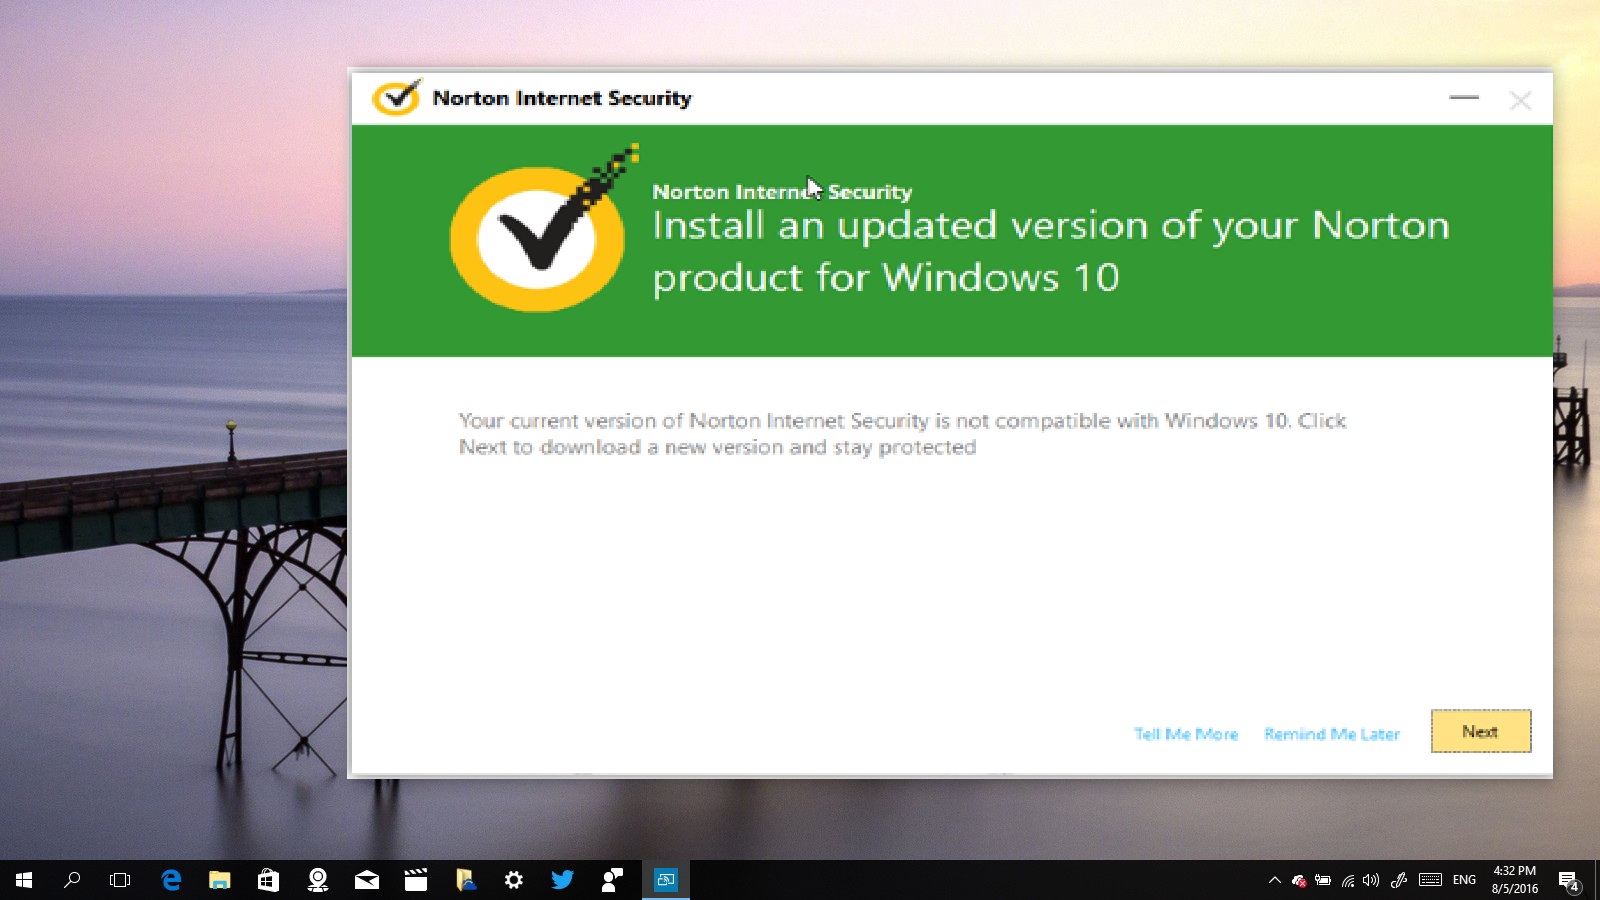 Er Norton kompatibel med Windows 10?